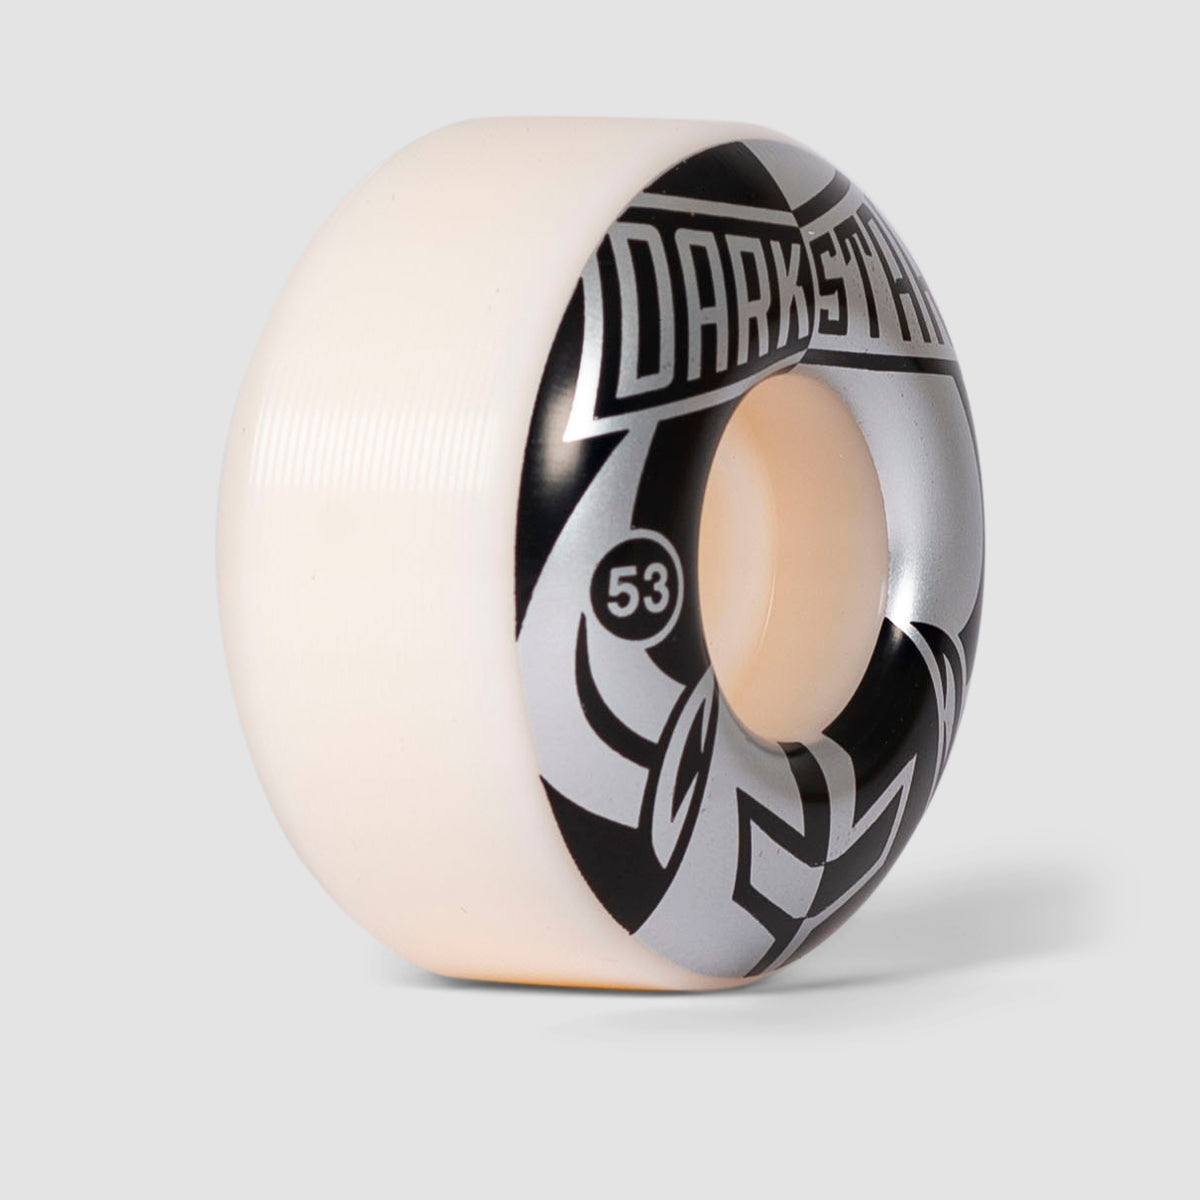 Darkstar Divide Skateboard Wheels Black/Silver 53mm